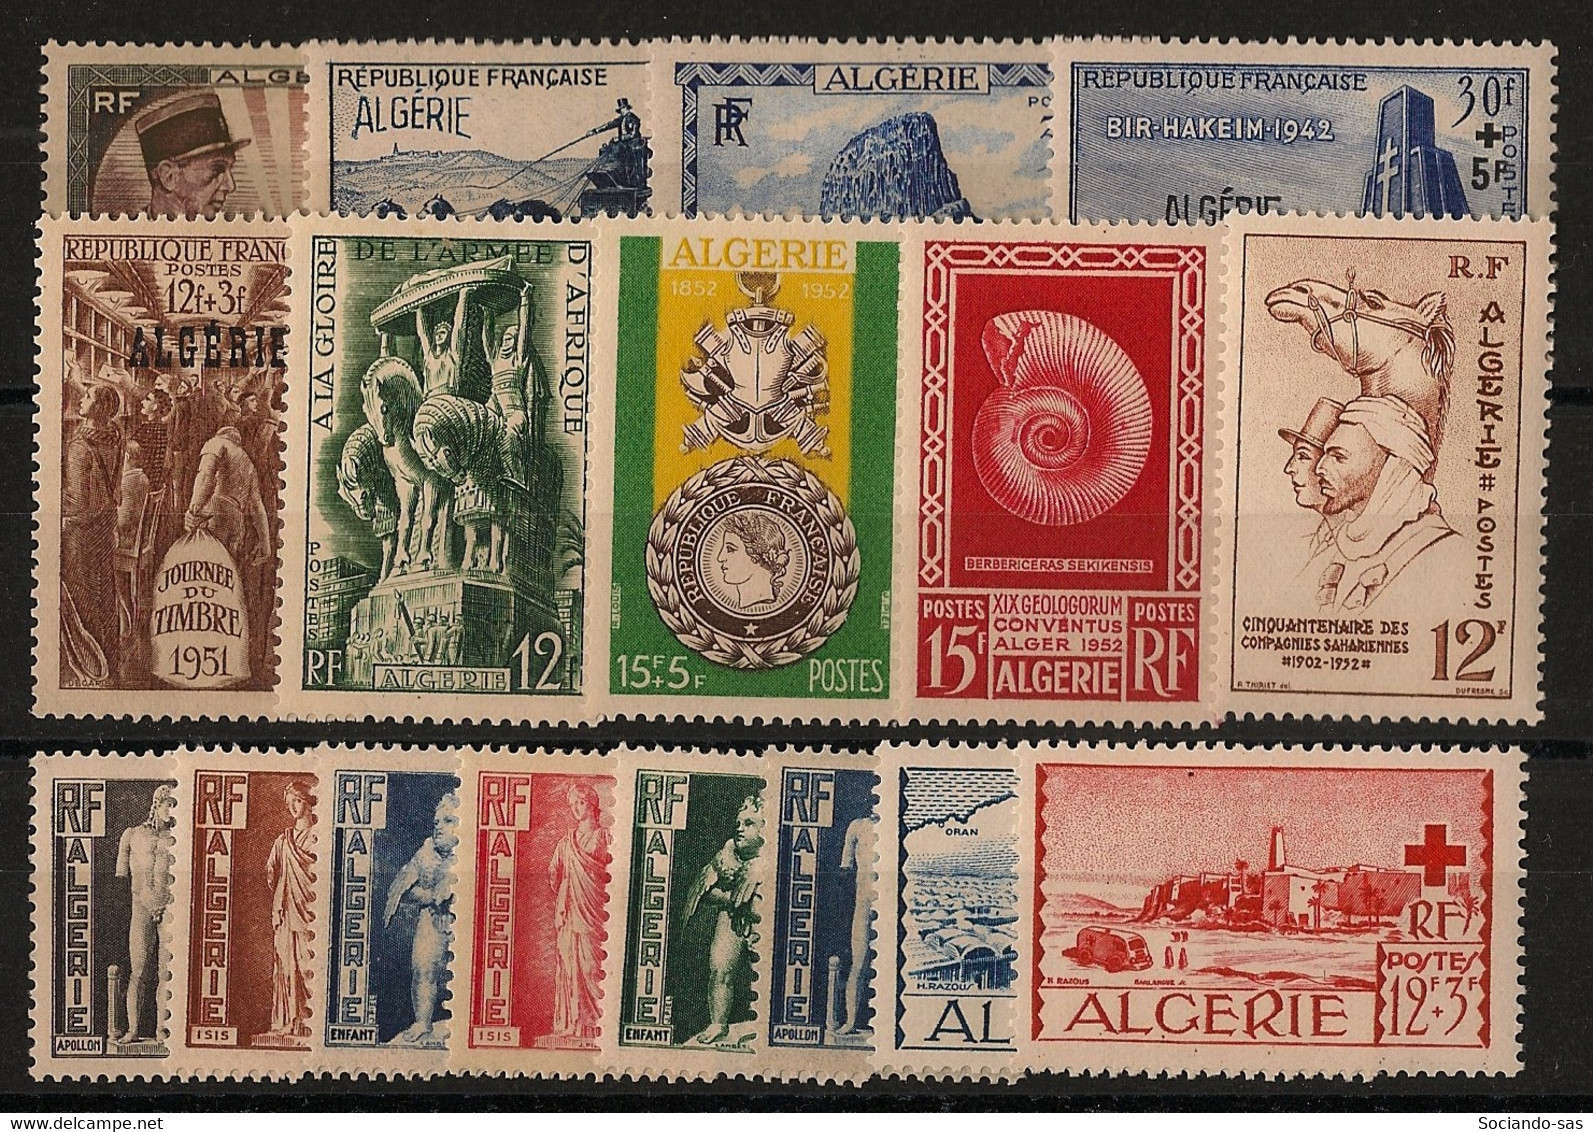 ALGERIE - Année Complète 1951-52 - N°YT. 286 à 302 - Complet - 17 Valeurs - Neuf Luxe ** / MNH / Postfrisch - Volledig Jaar